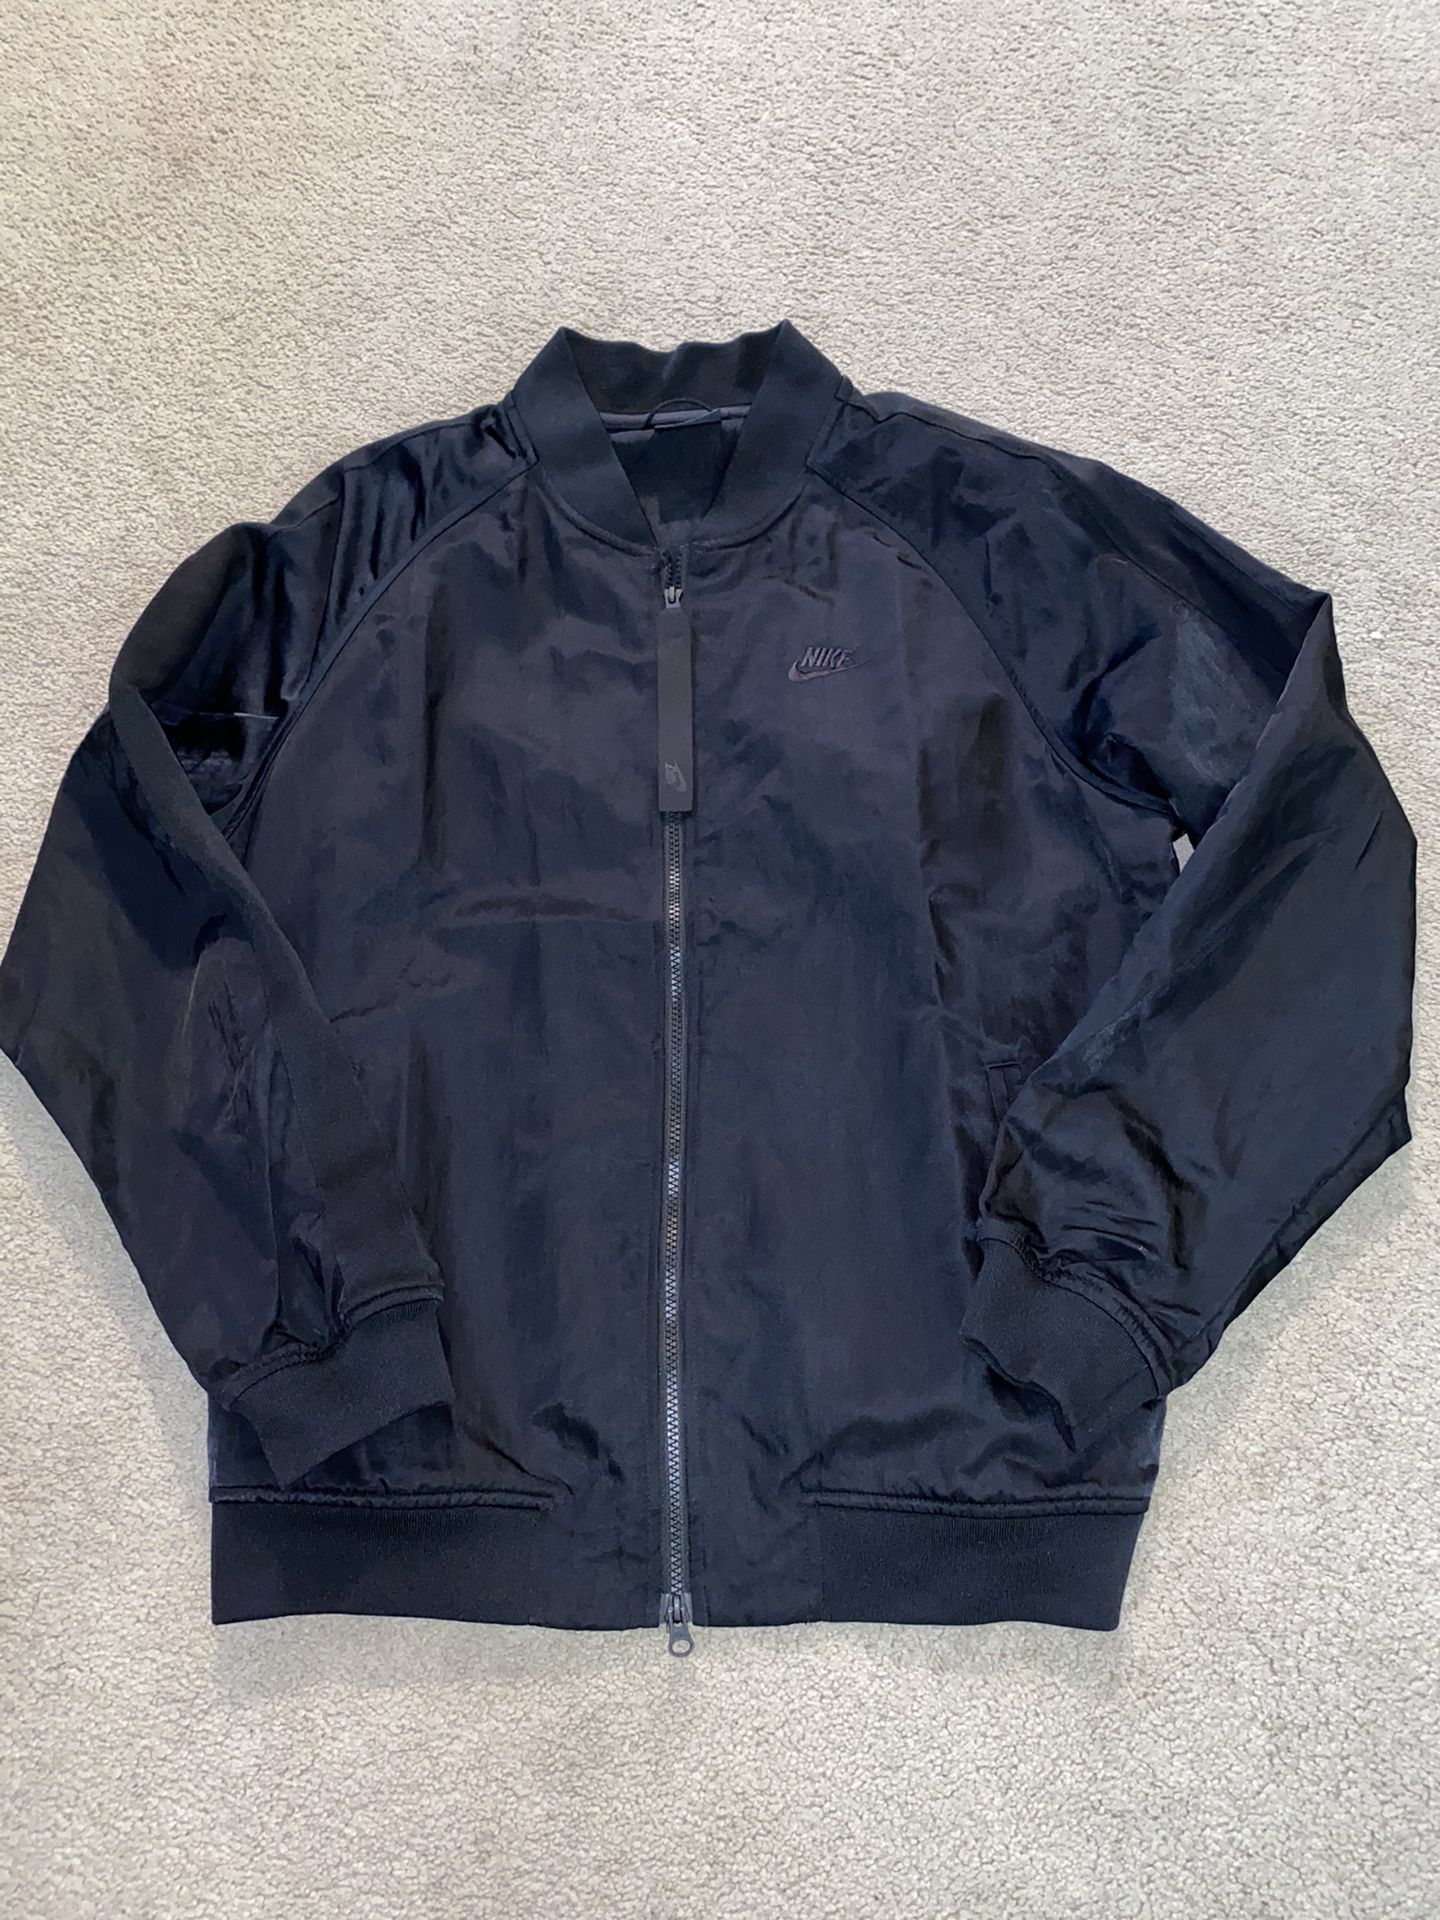 Nike sportswear men’s large black bomber jacket